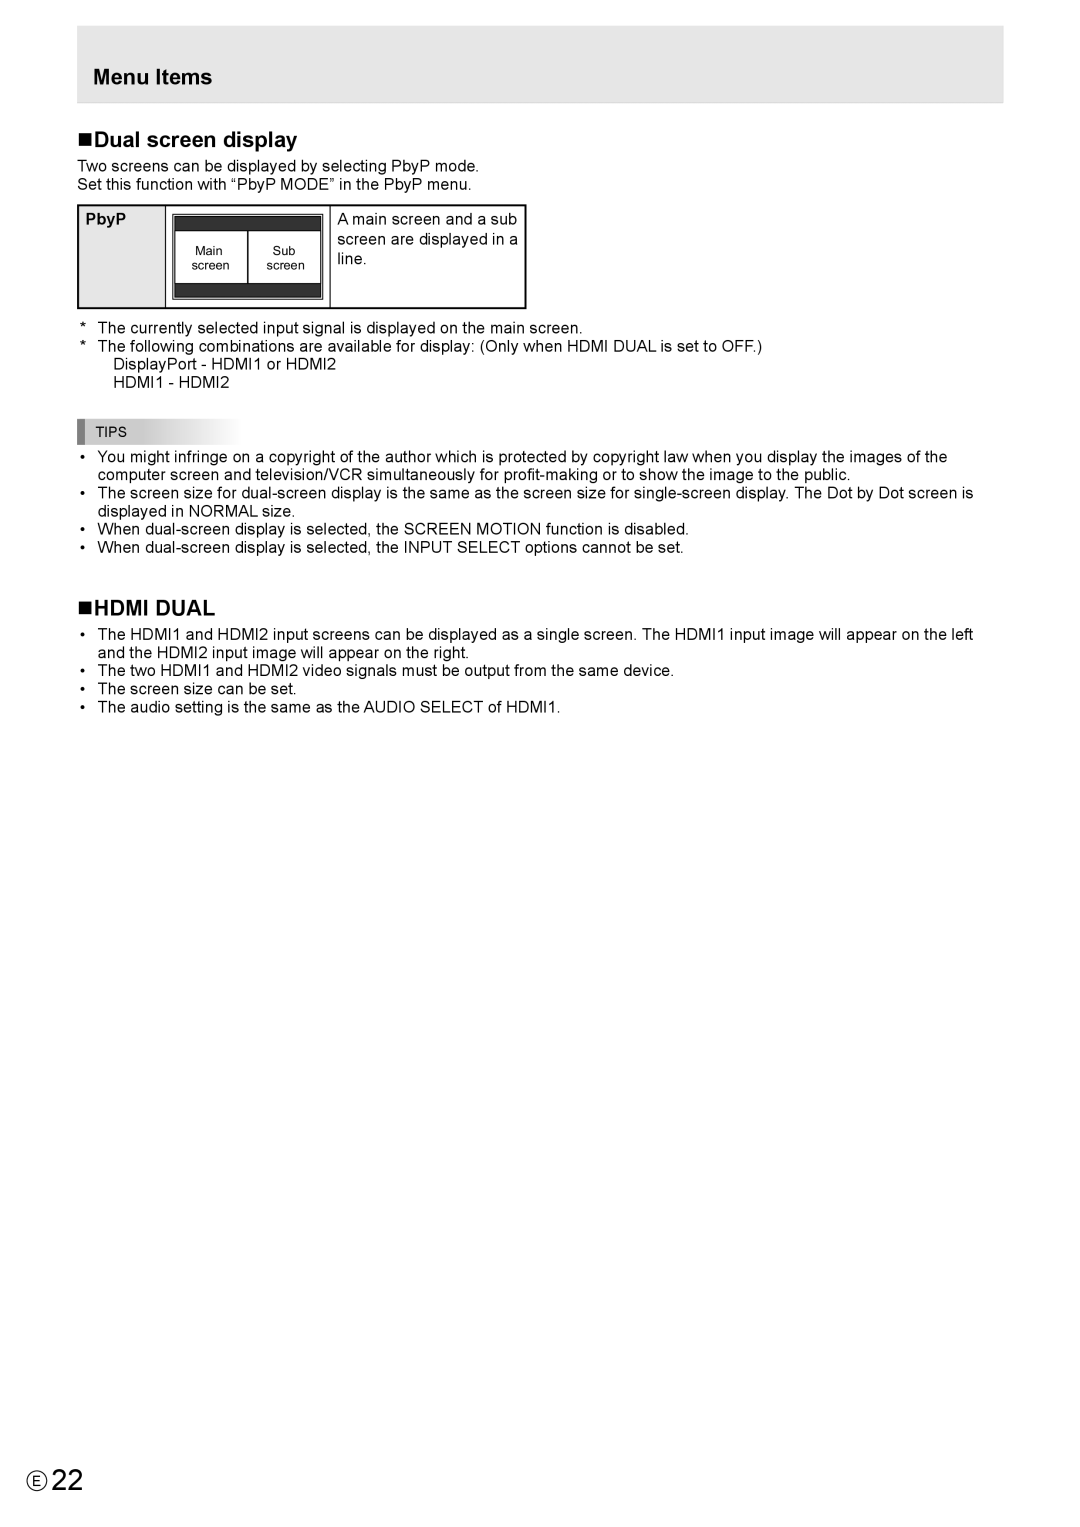 Sharp PN-K321 operation manual Menu Items nDual screen display, nHDMI DUAL, PbyP 